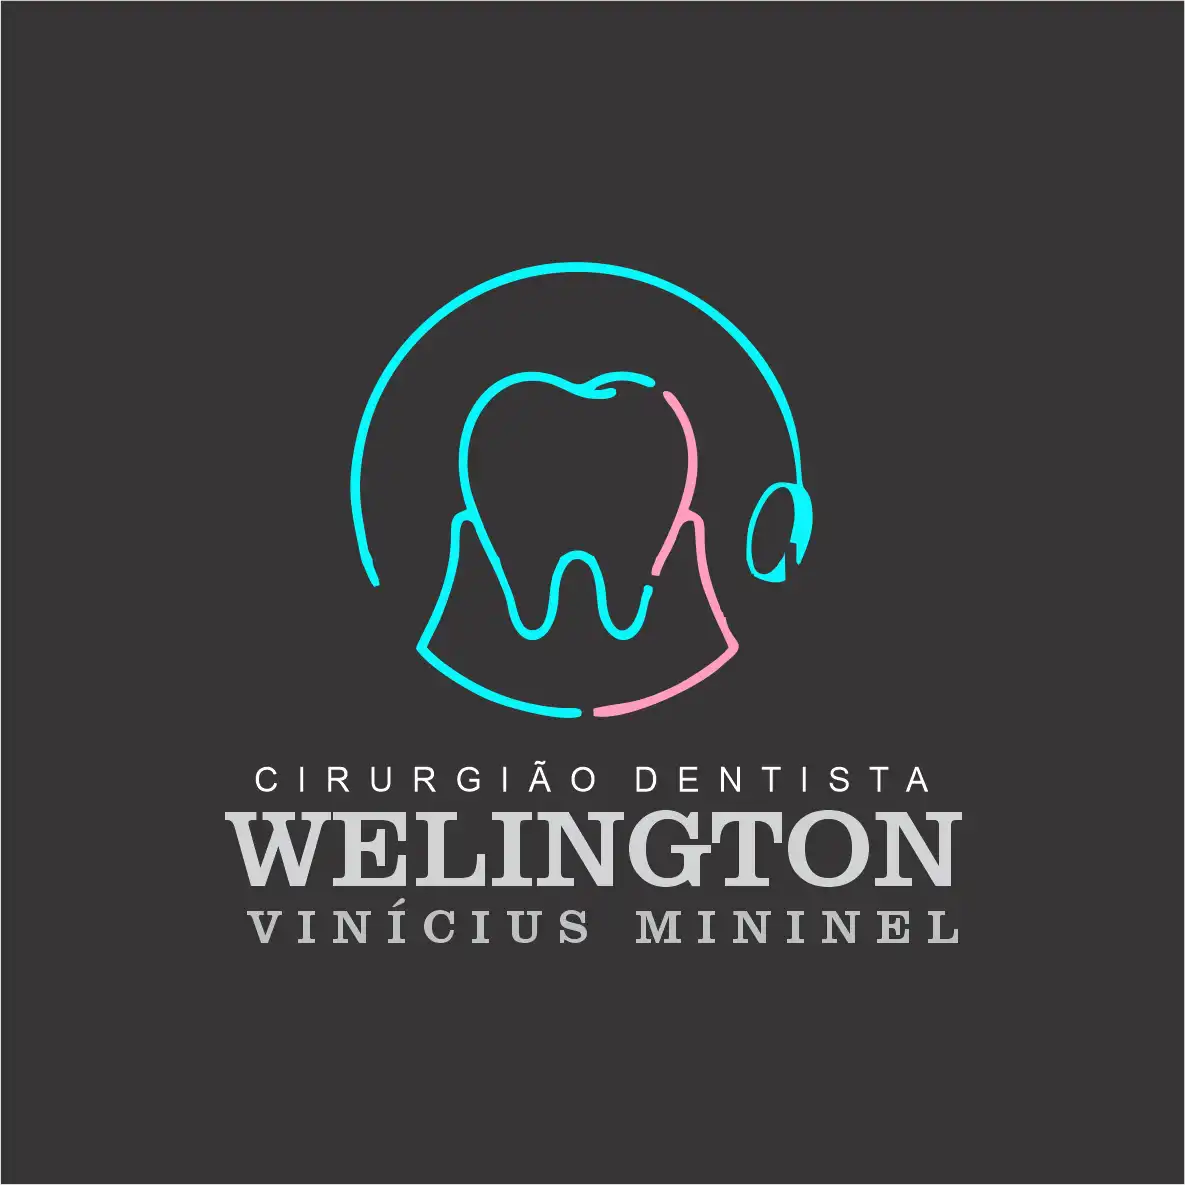 Logotipo Cirurgião Dentista
